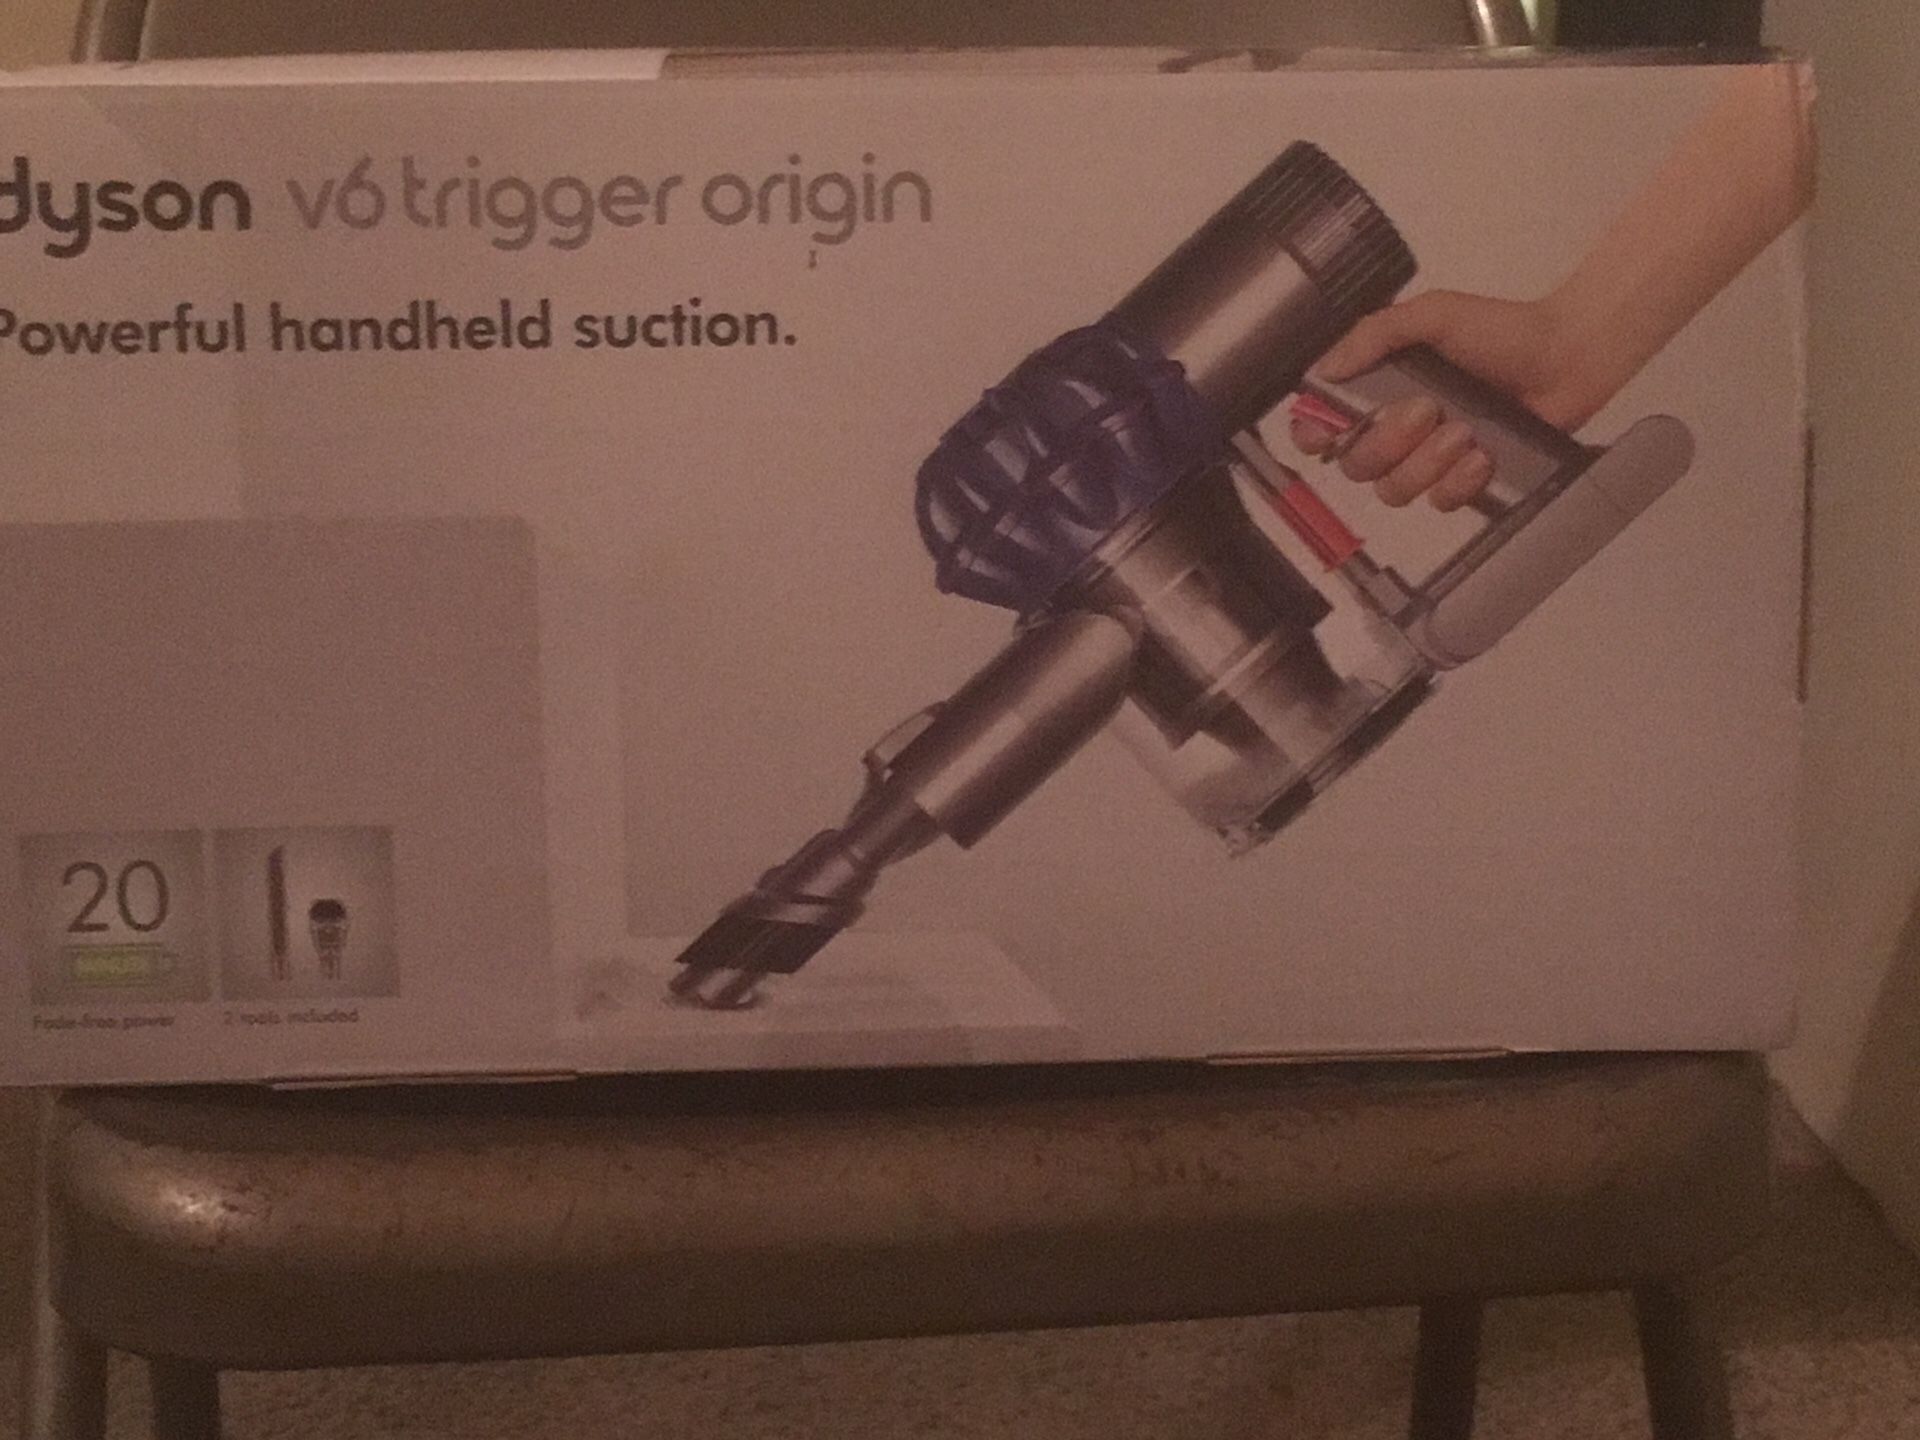 NEW Dyson V6 Trigger Origin Handheld Vacuum